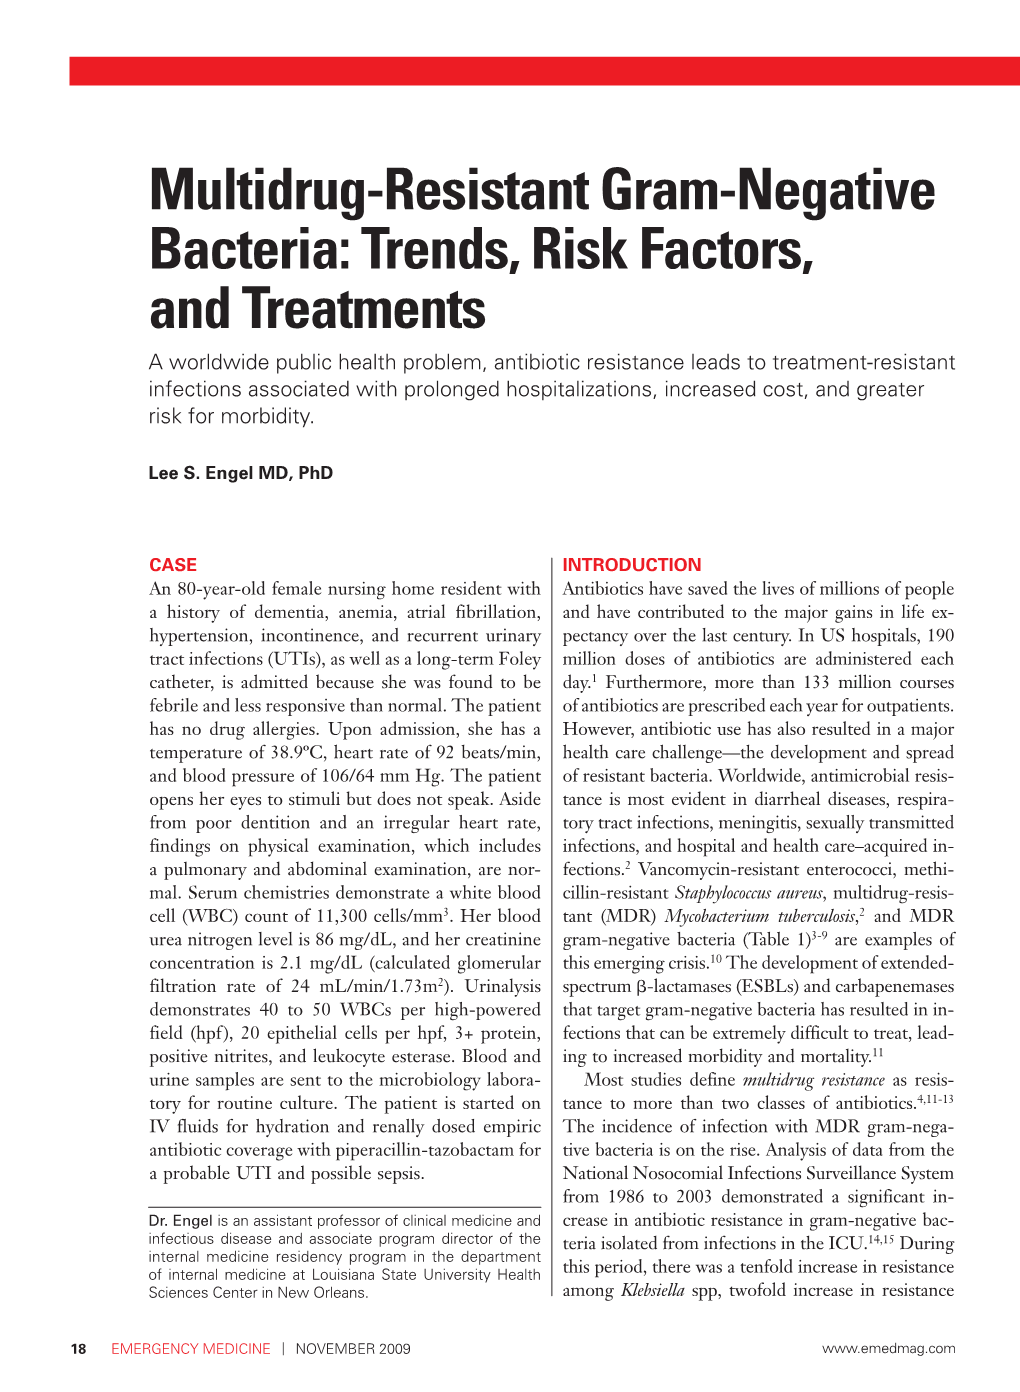 Multidrug-Resistant Gram-Negative Bacteria